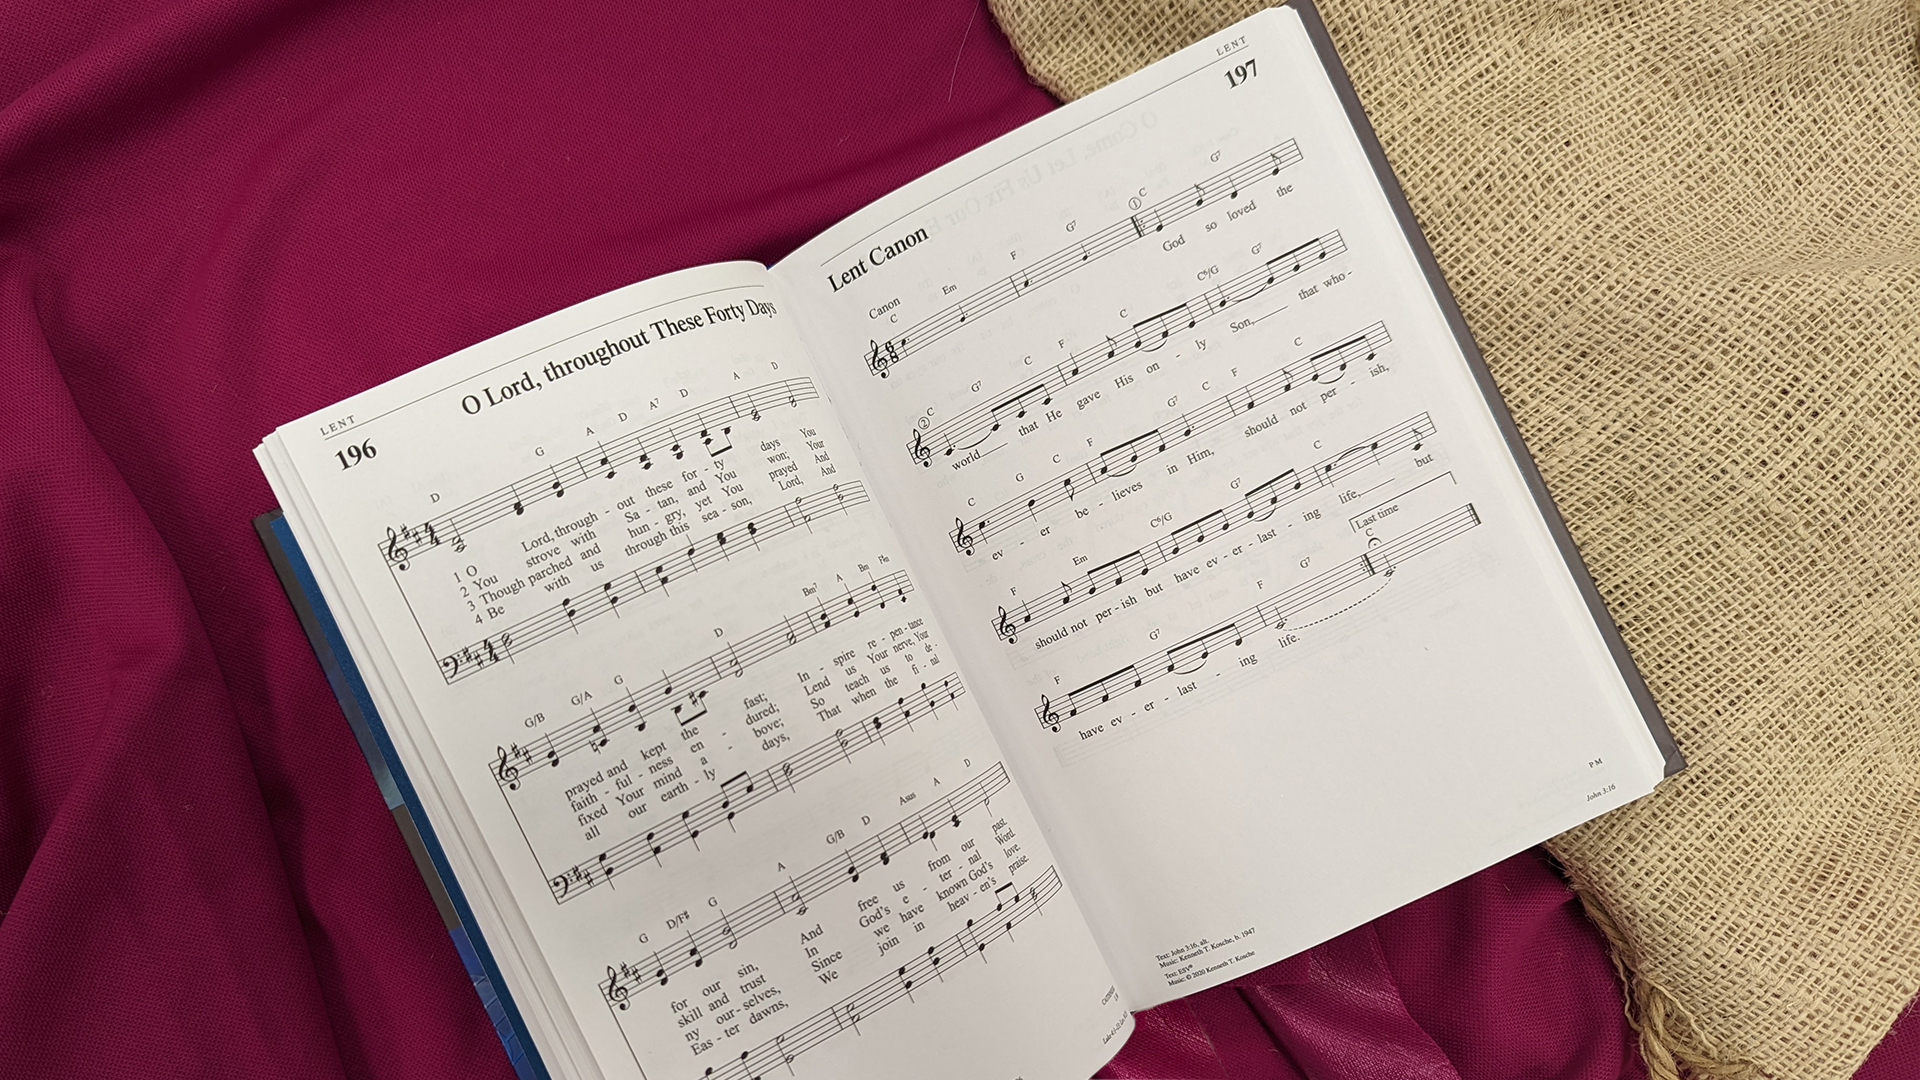 Teaching Children about Lent through Music